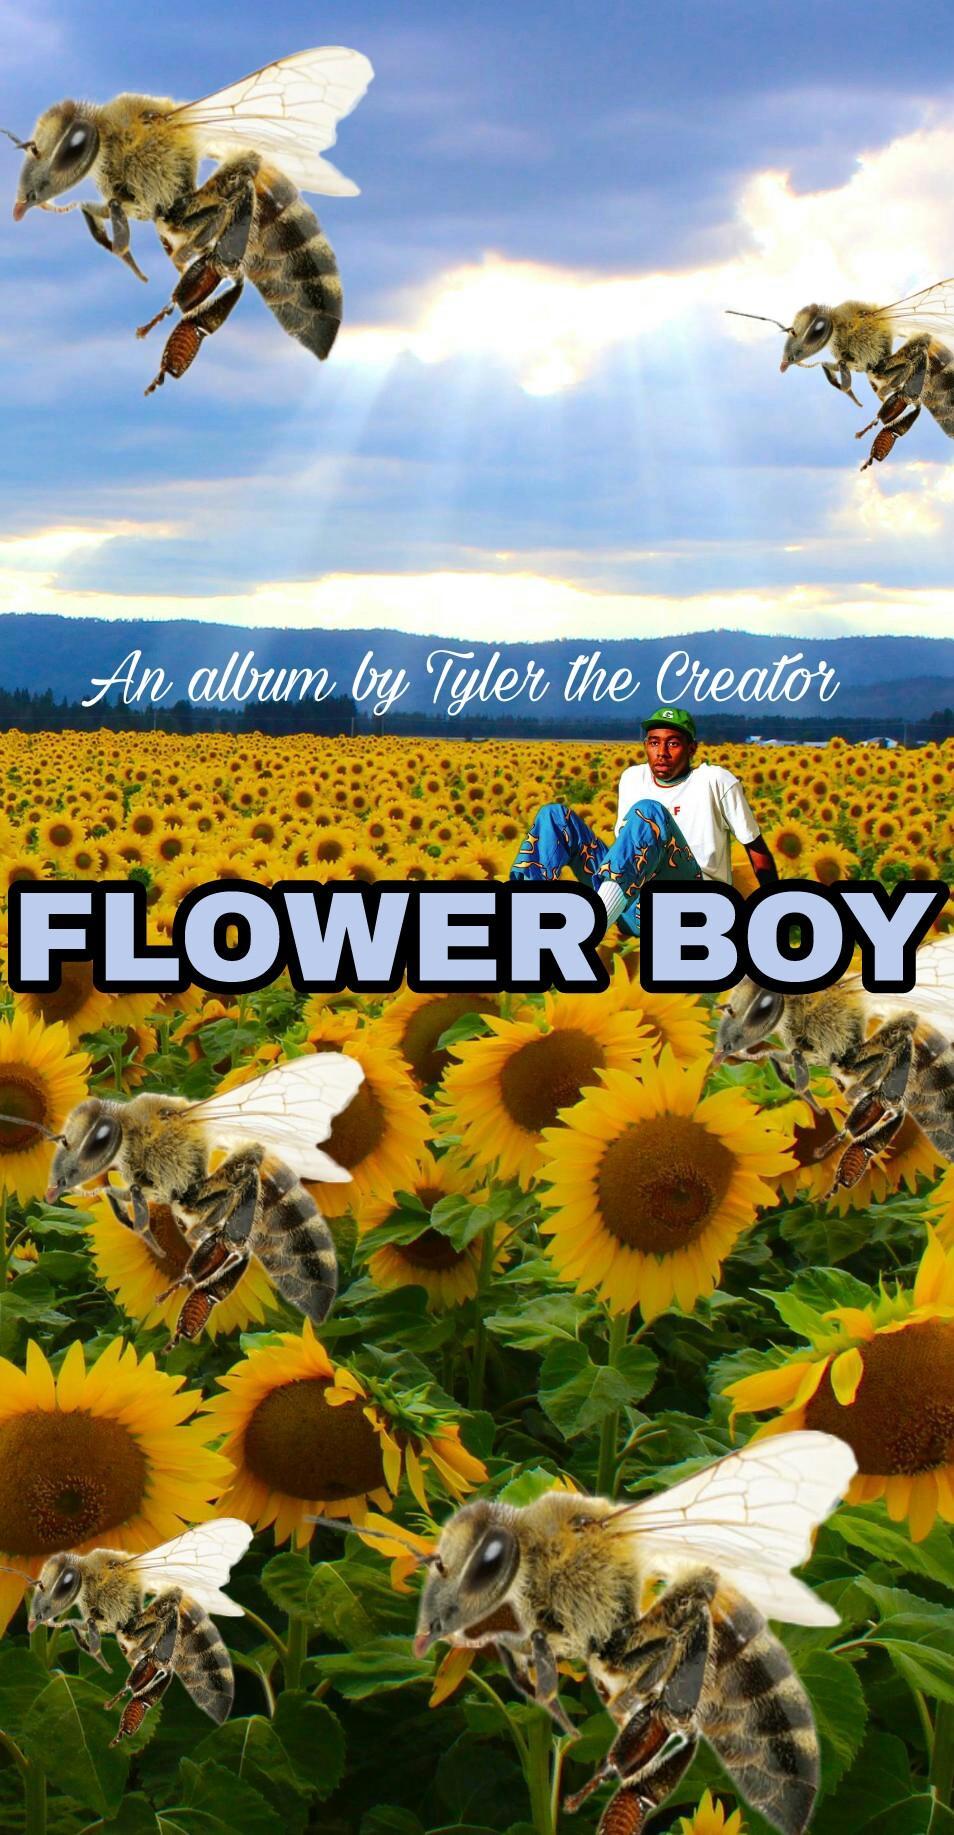 tyler the creator flower boy album free download